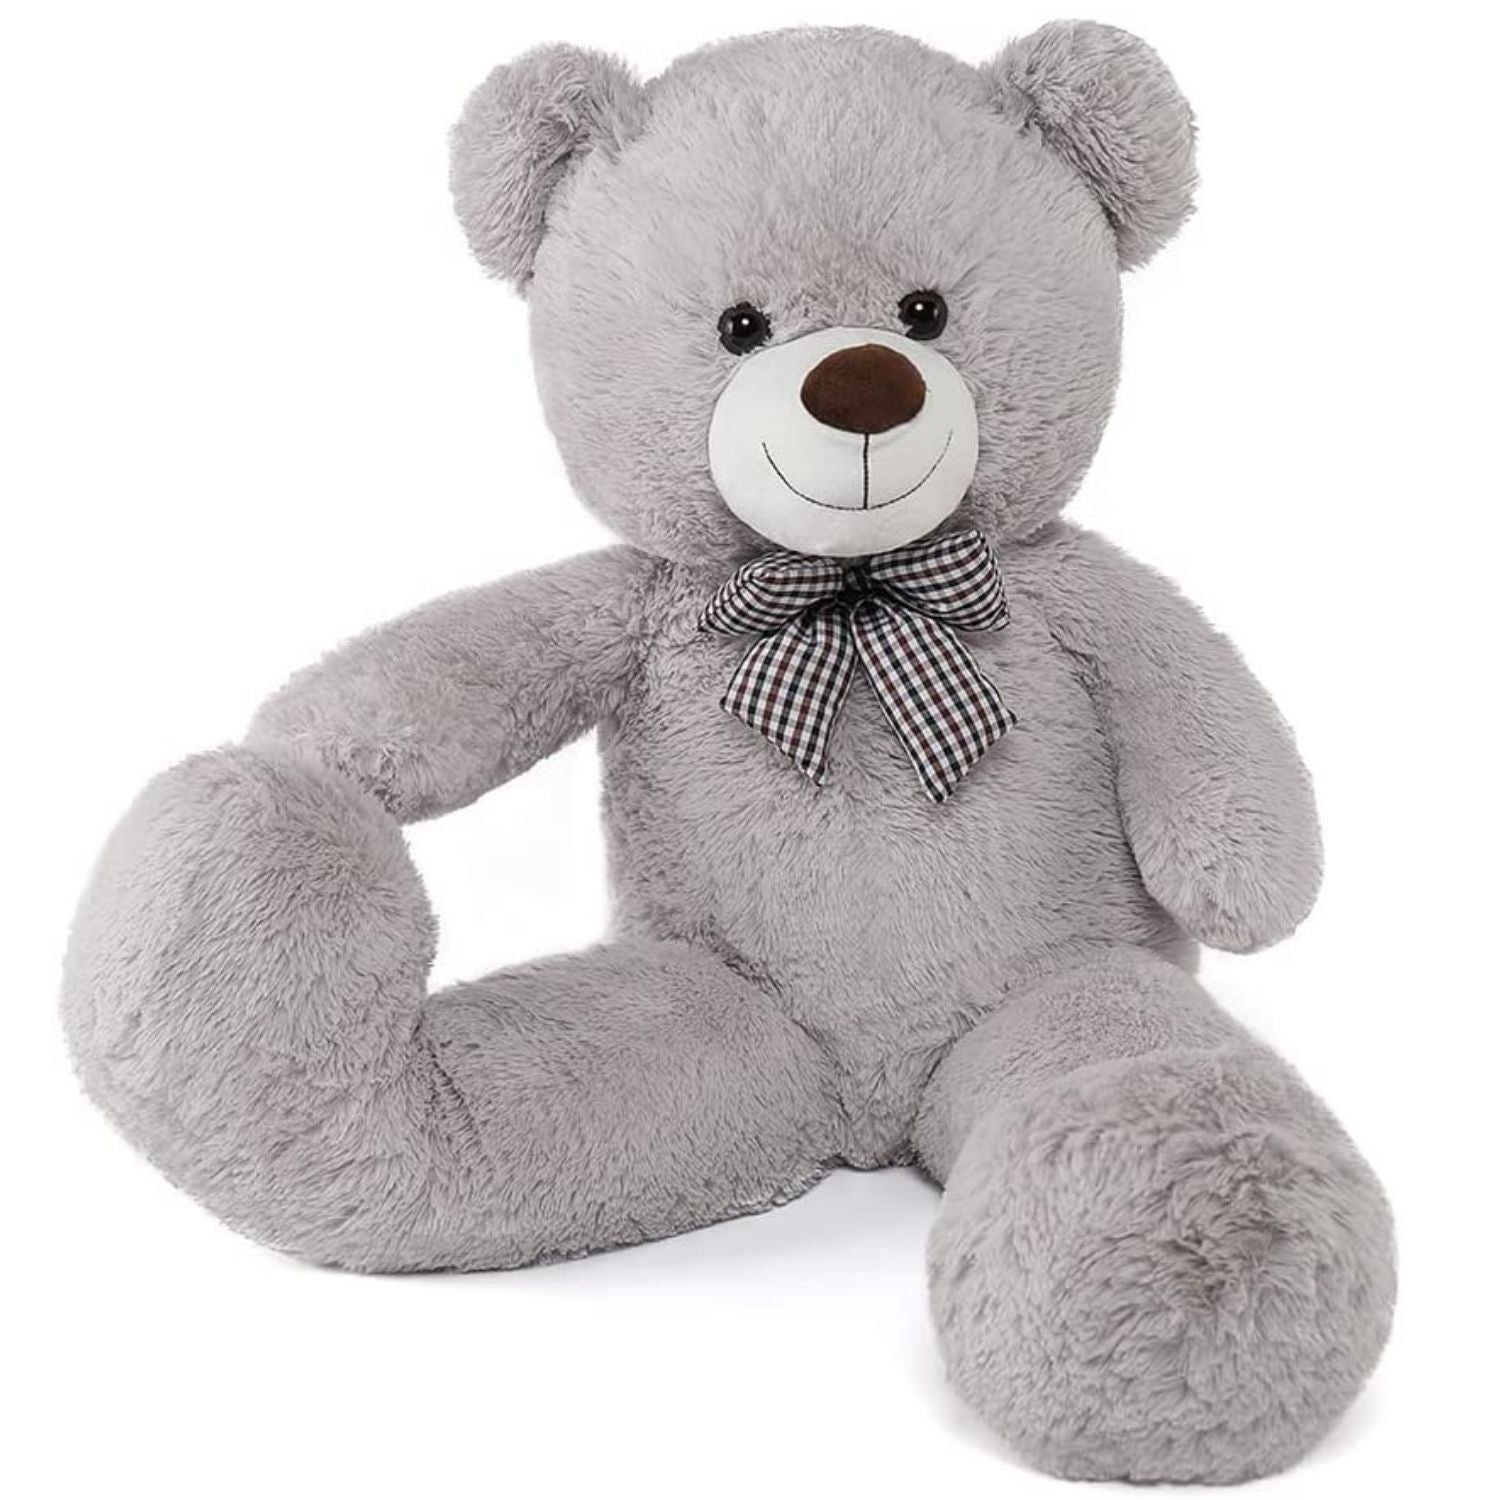 Giant Teddy Bear Stuffed Animal Toy, Gray, 39/47/55 Inches